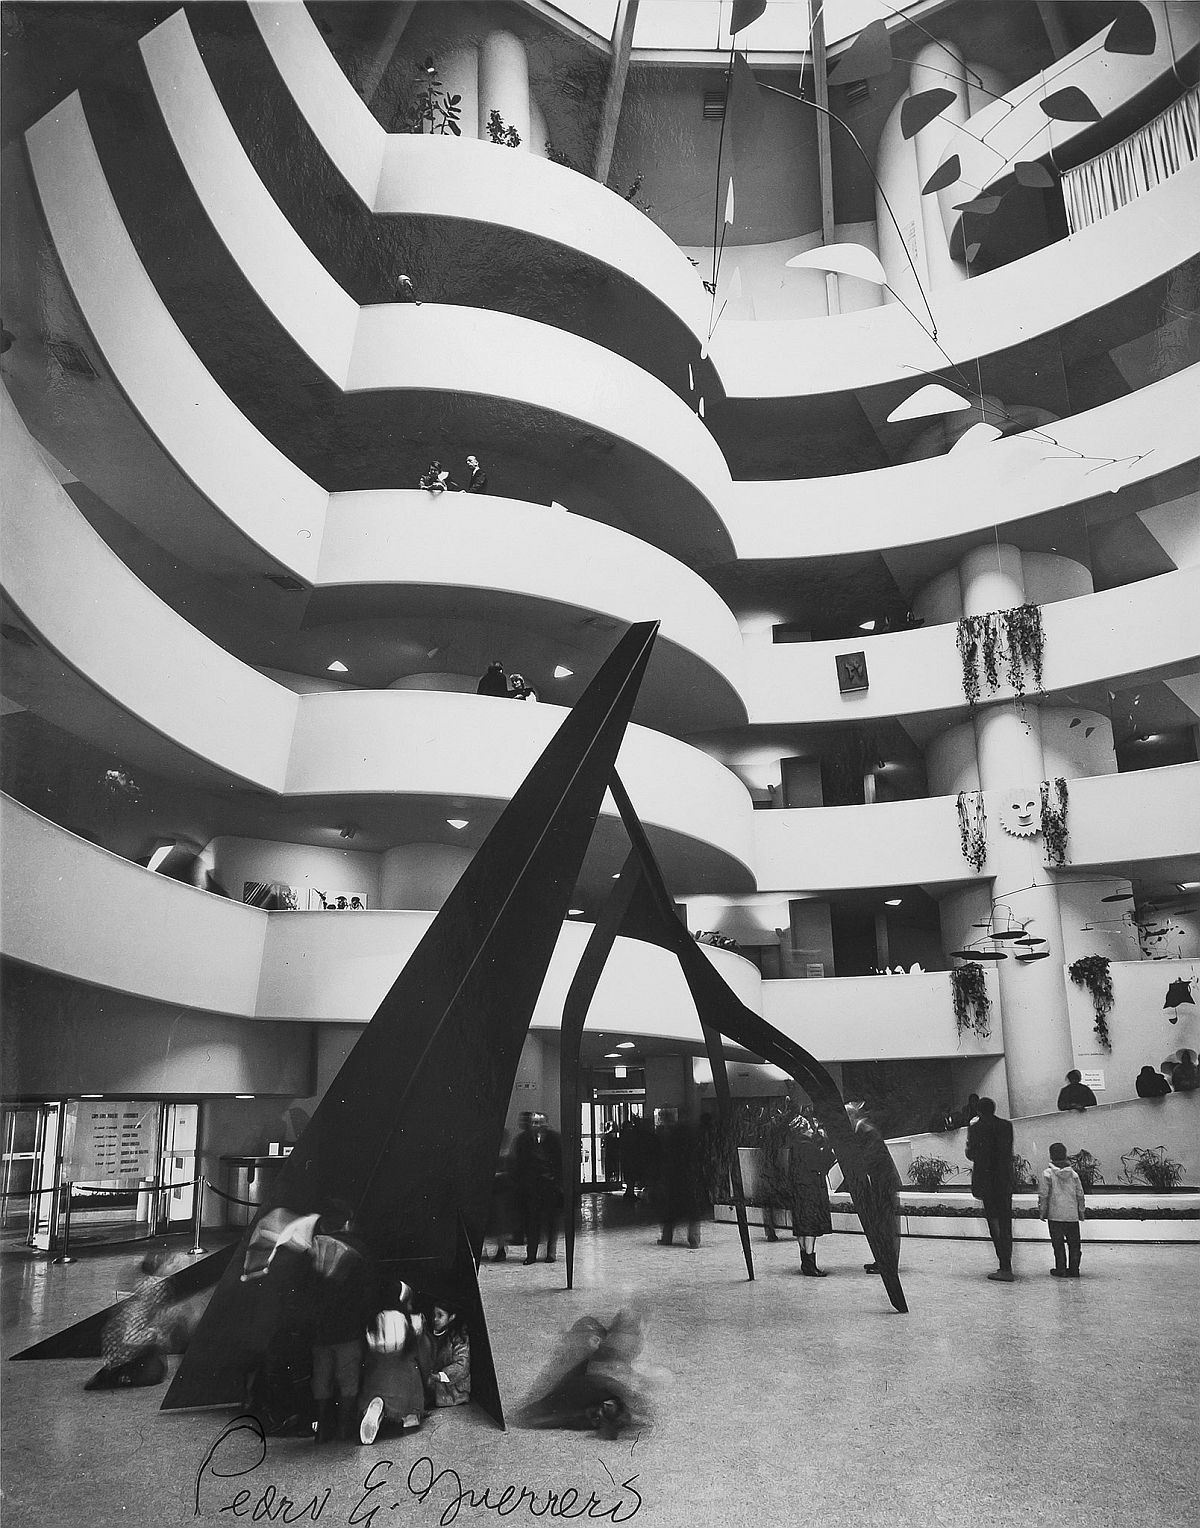 Estate of Pedro E. Guerrero, Calder Retrospective at the Guggenheim with "Guillotine pour huit", 1964